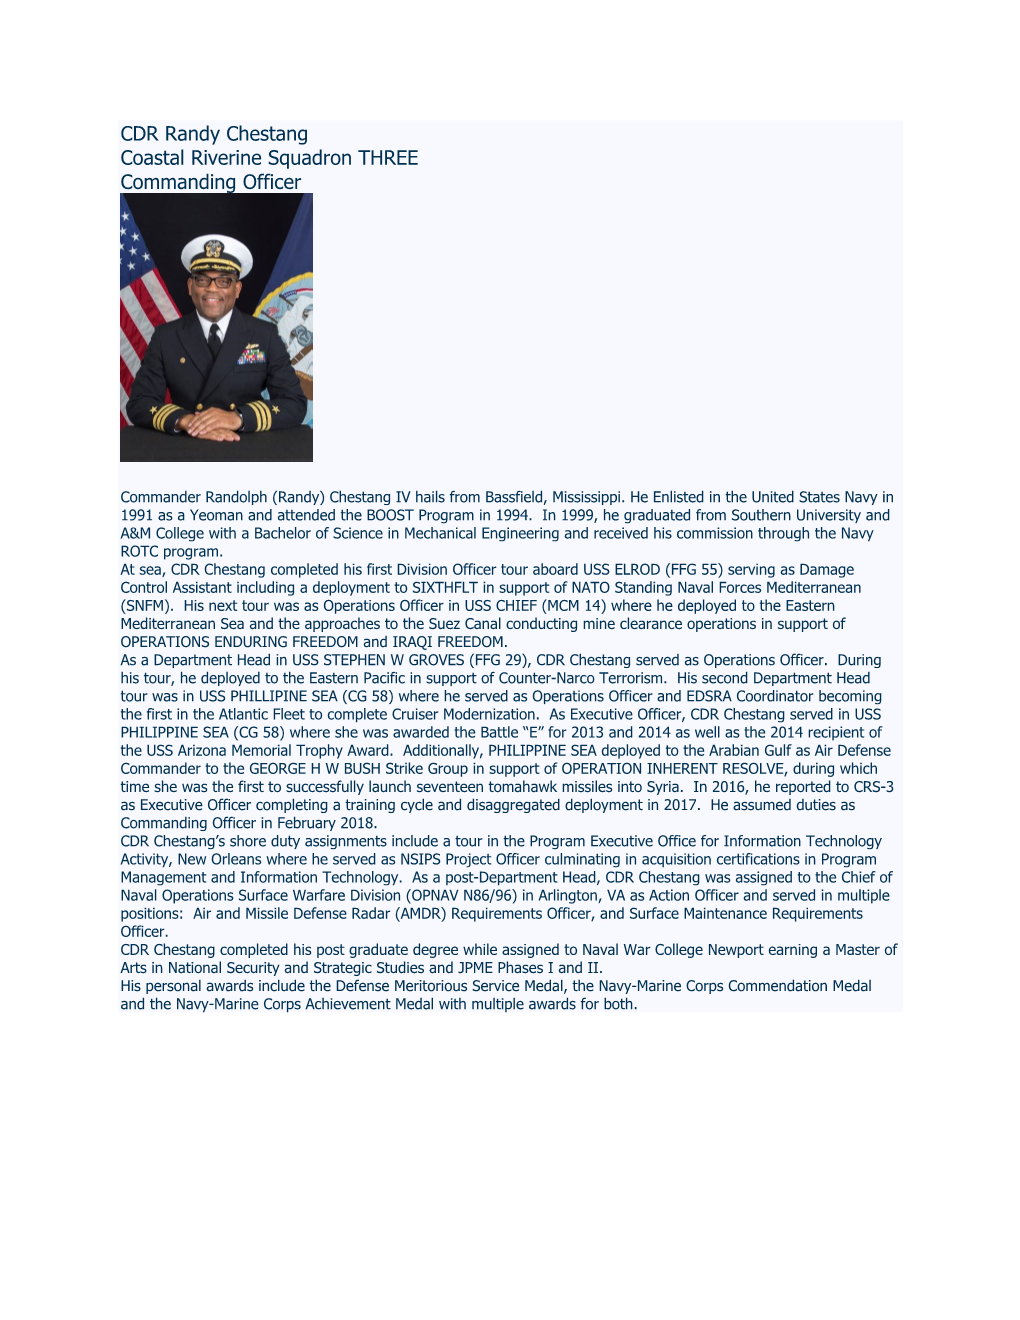 CDR Randy Chestang Coastal Riverine Squadron THREE Commanding Officer